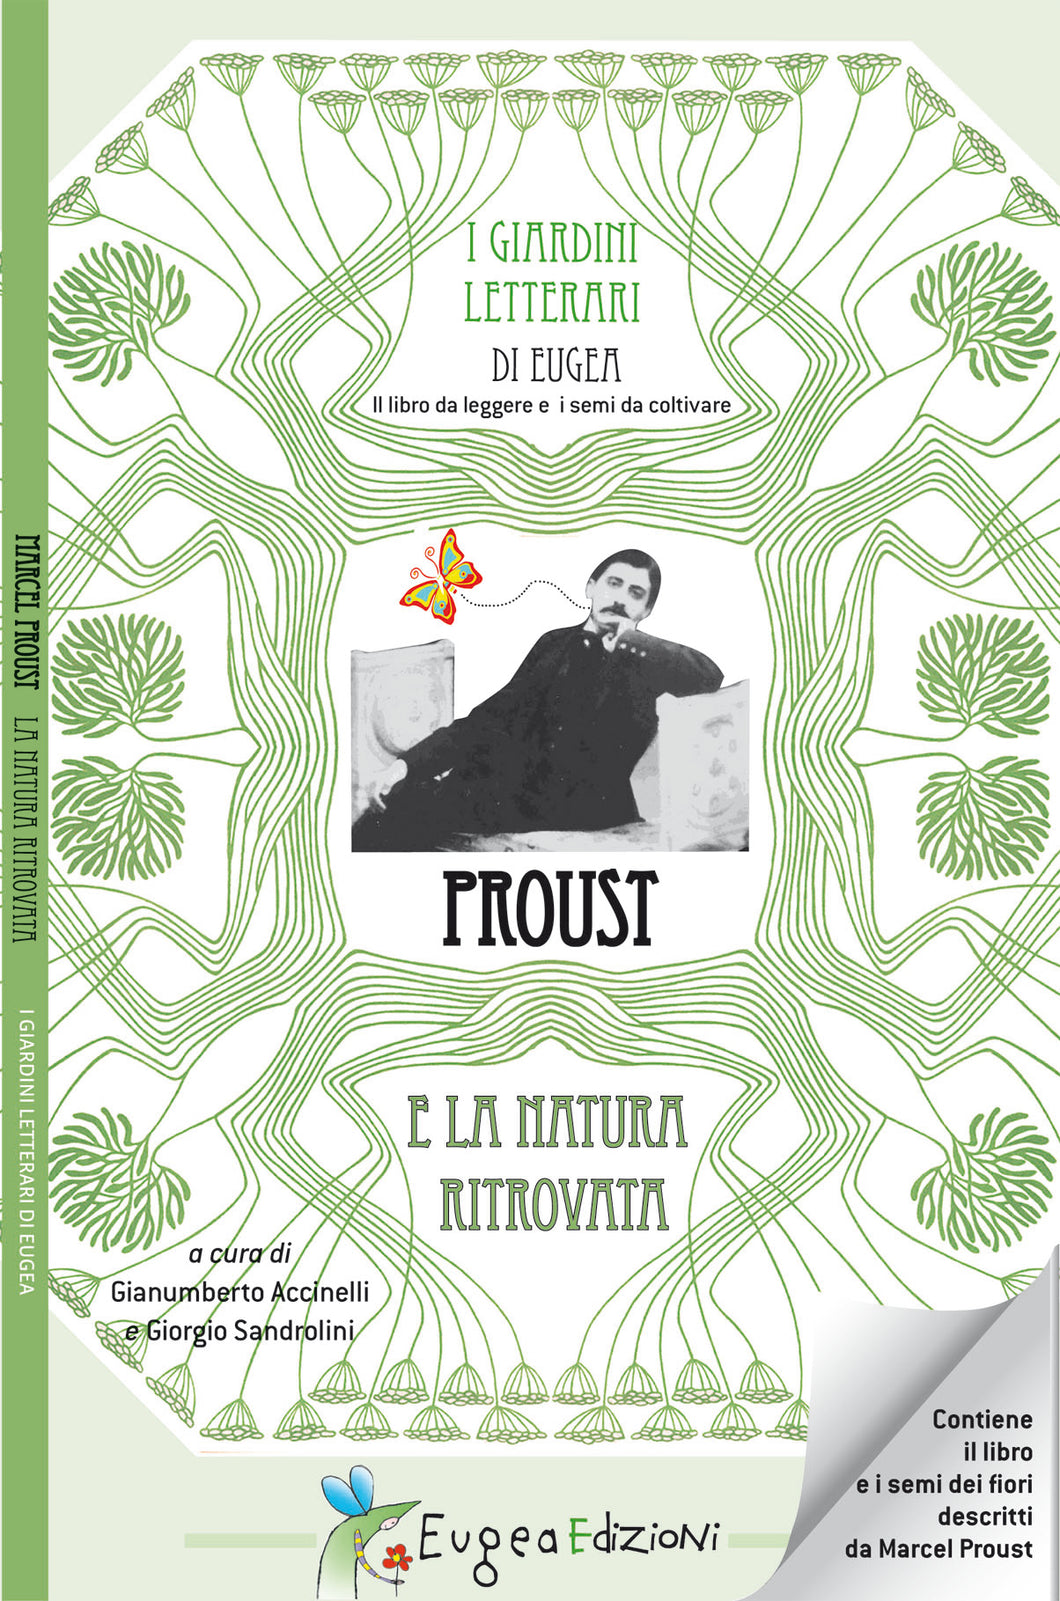 Giardino letterario: Marcel Proust